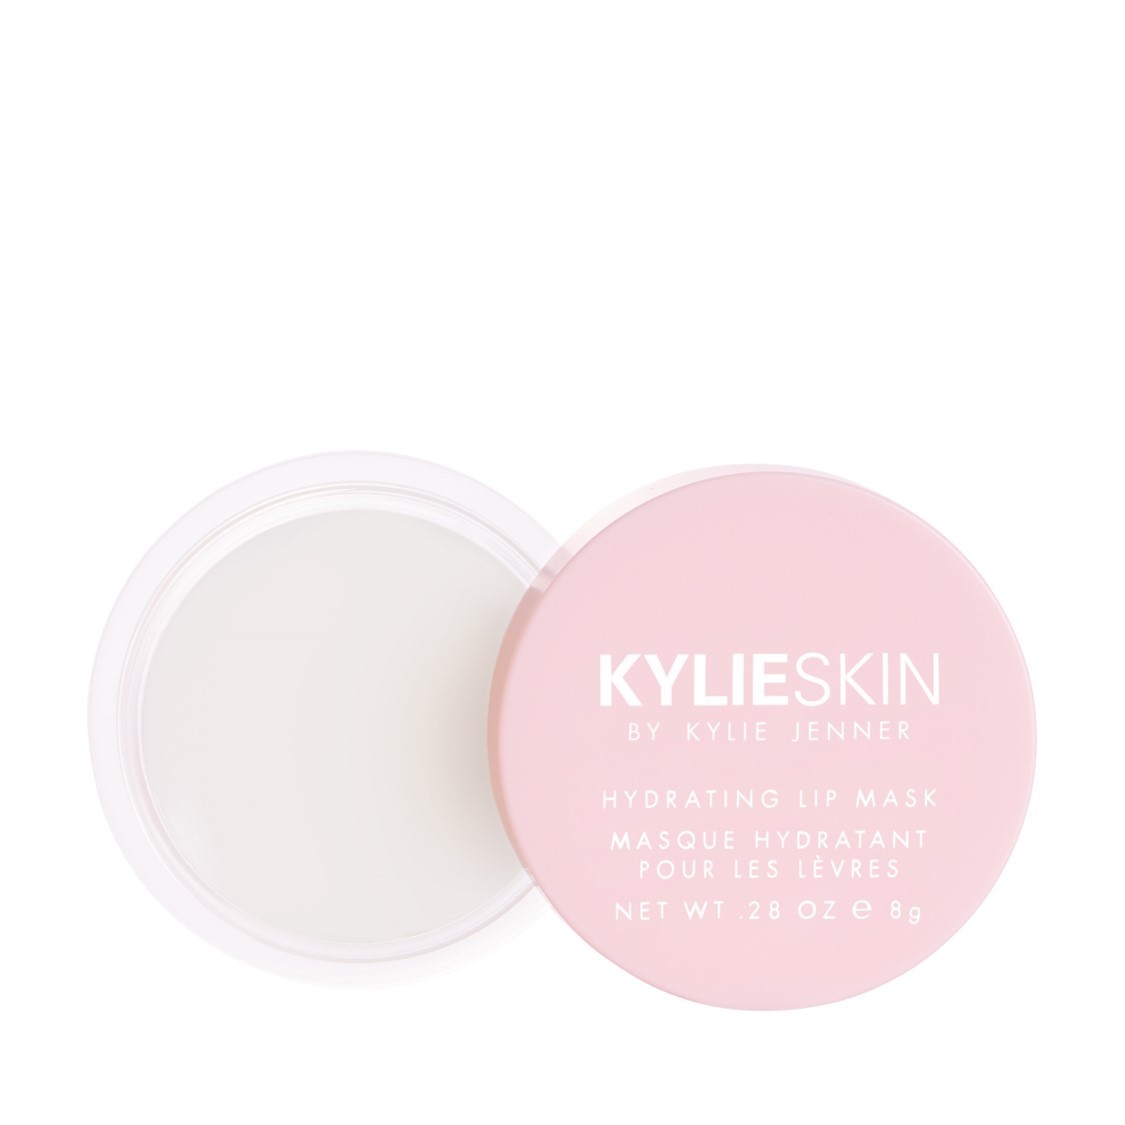 Kylie Skin - Hydrating Lip Mask - 